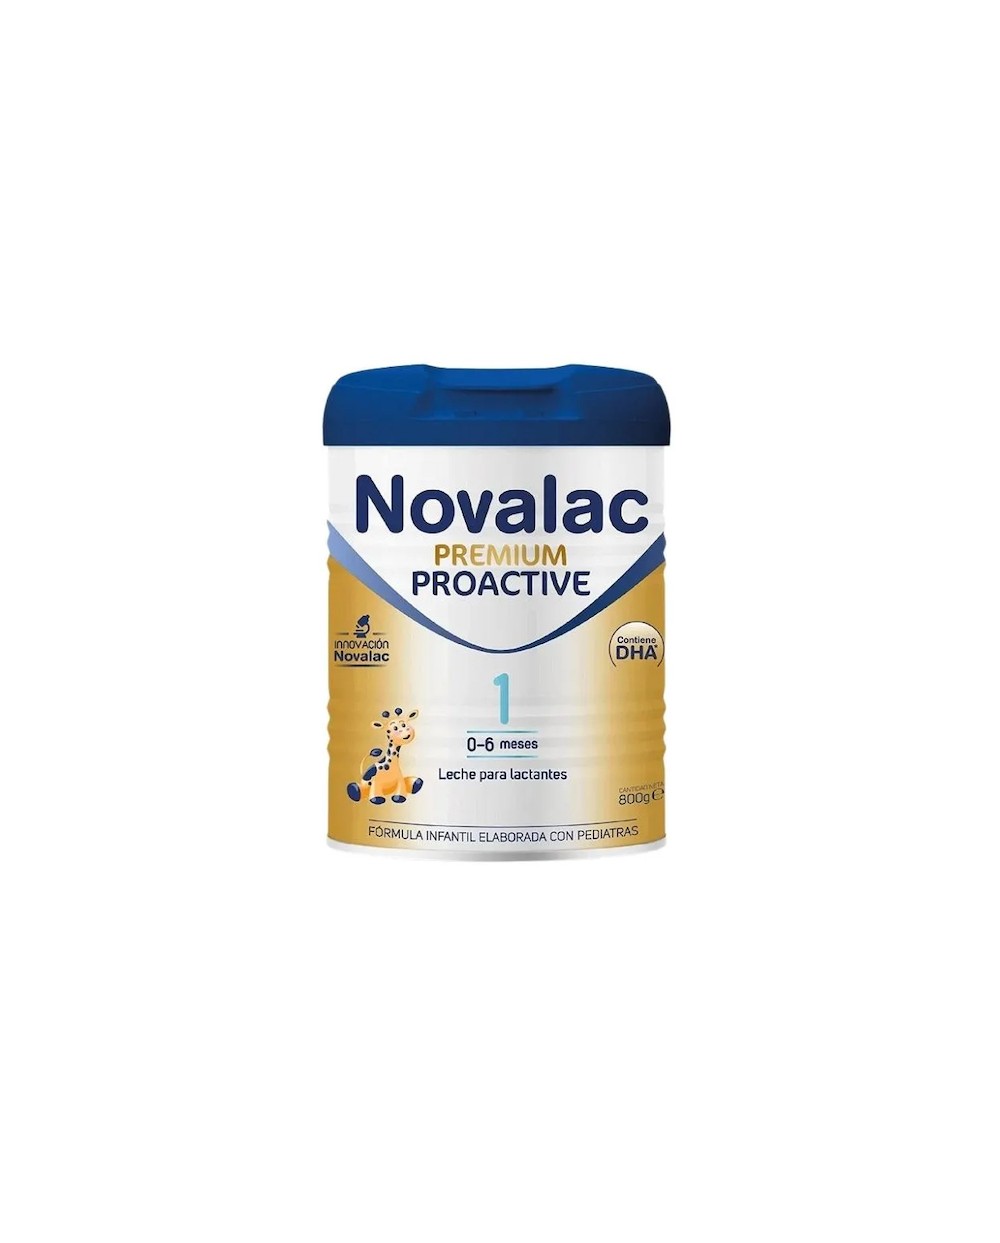 Novalac Premium Proactive 1 800 gr.